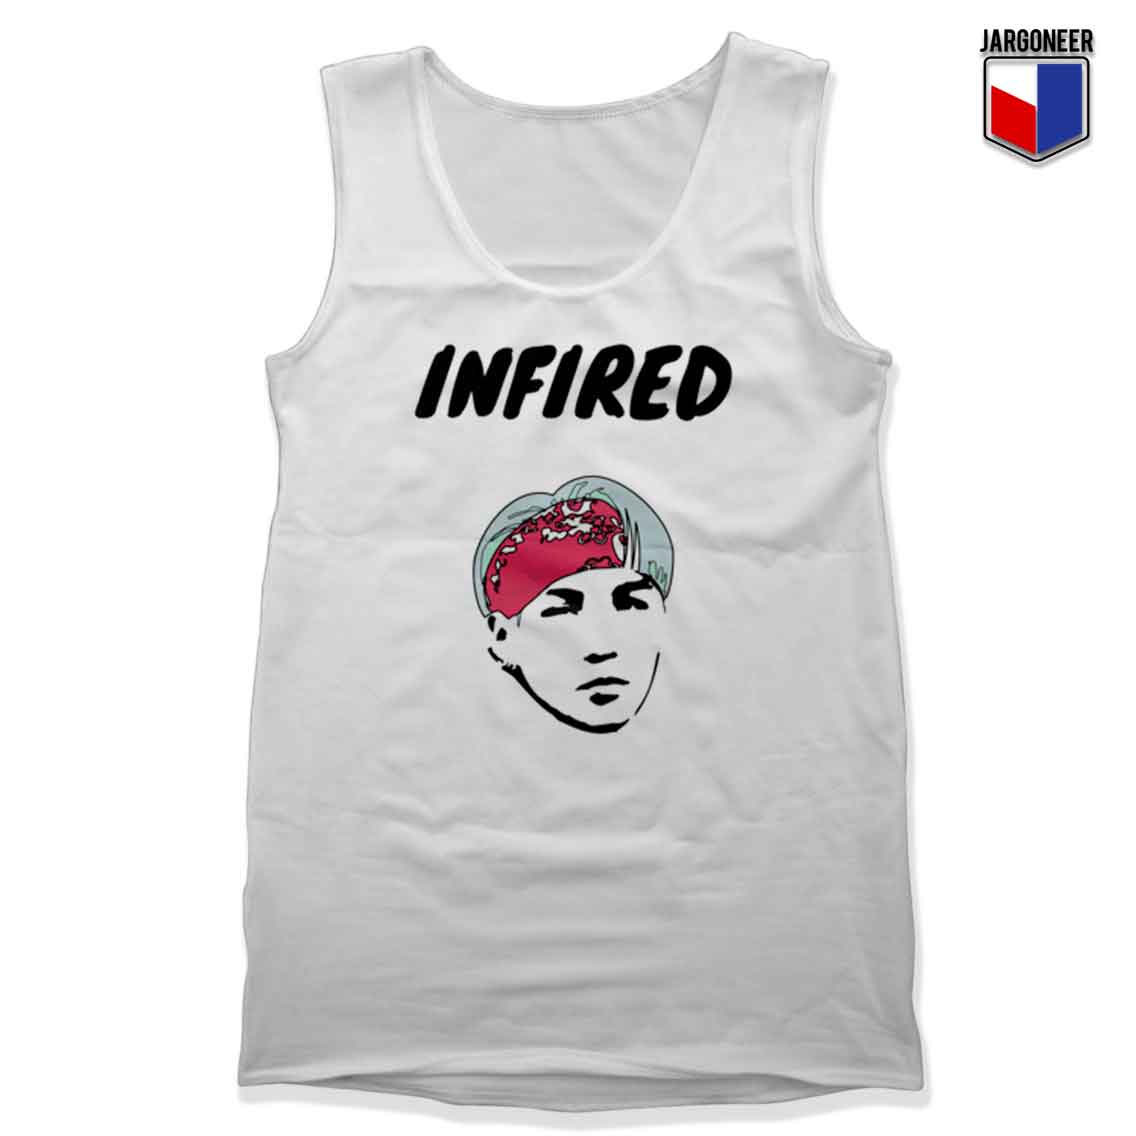 Infired Man Suga BTS - Shop Unique Graphic Cool Shirt Designs